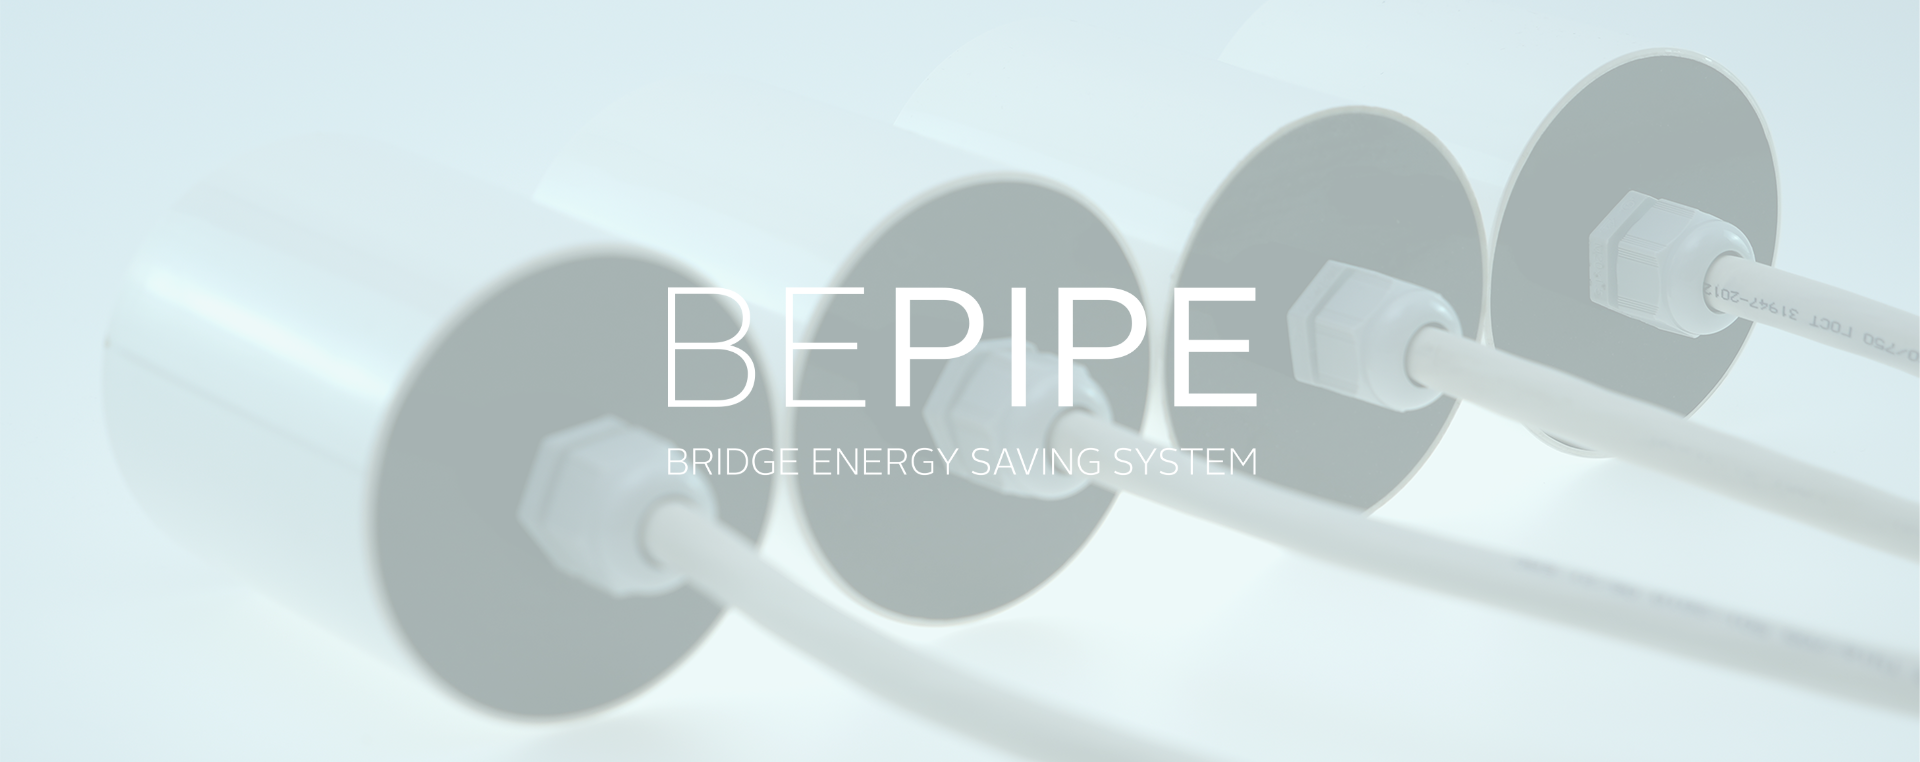 BEPIPE of Bridge Energy